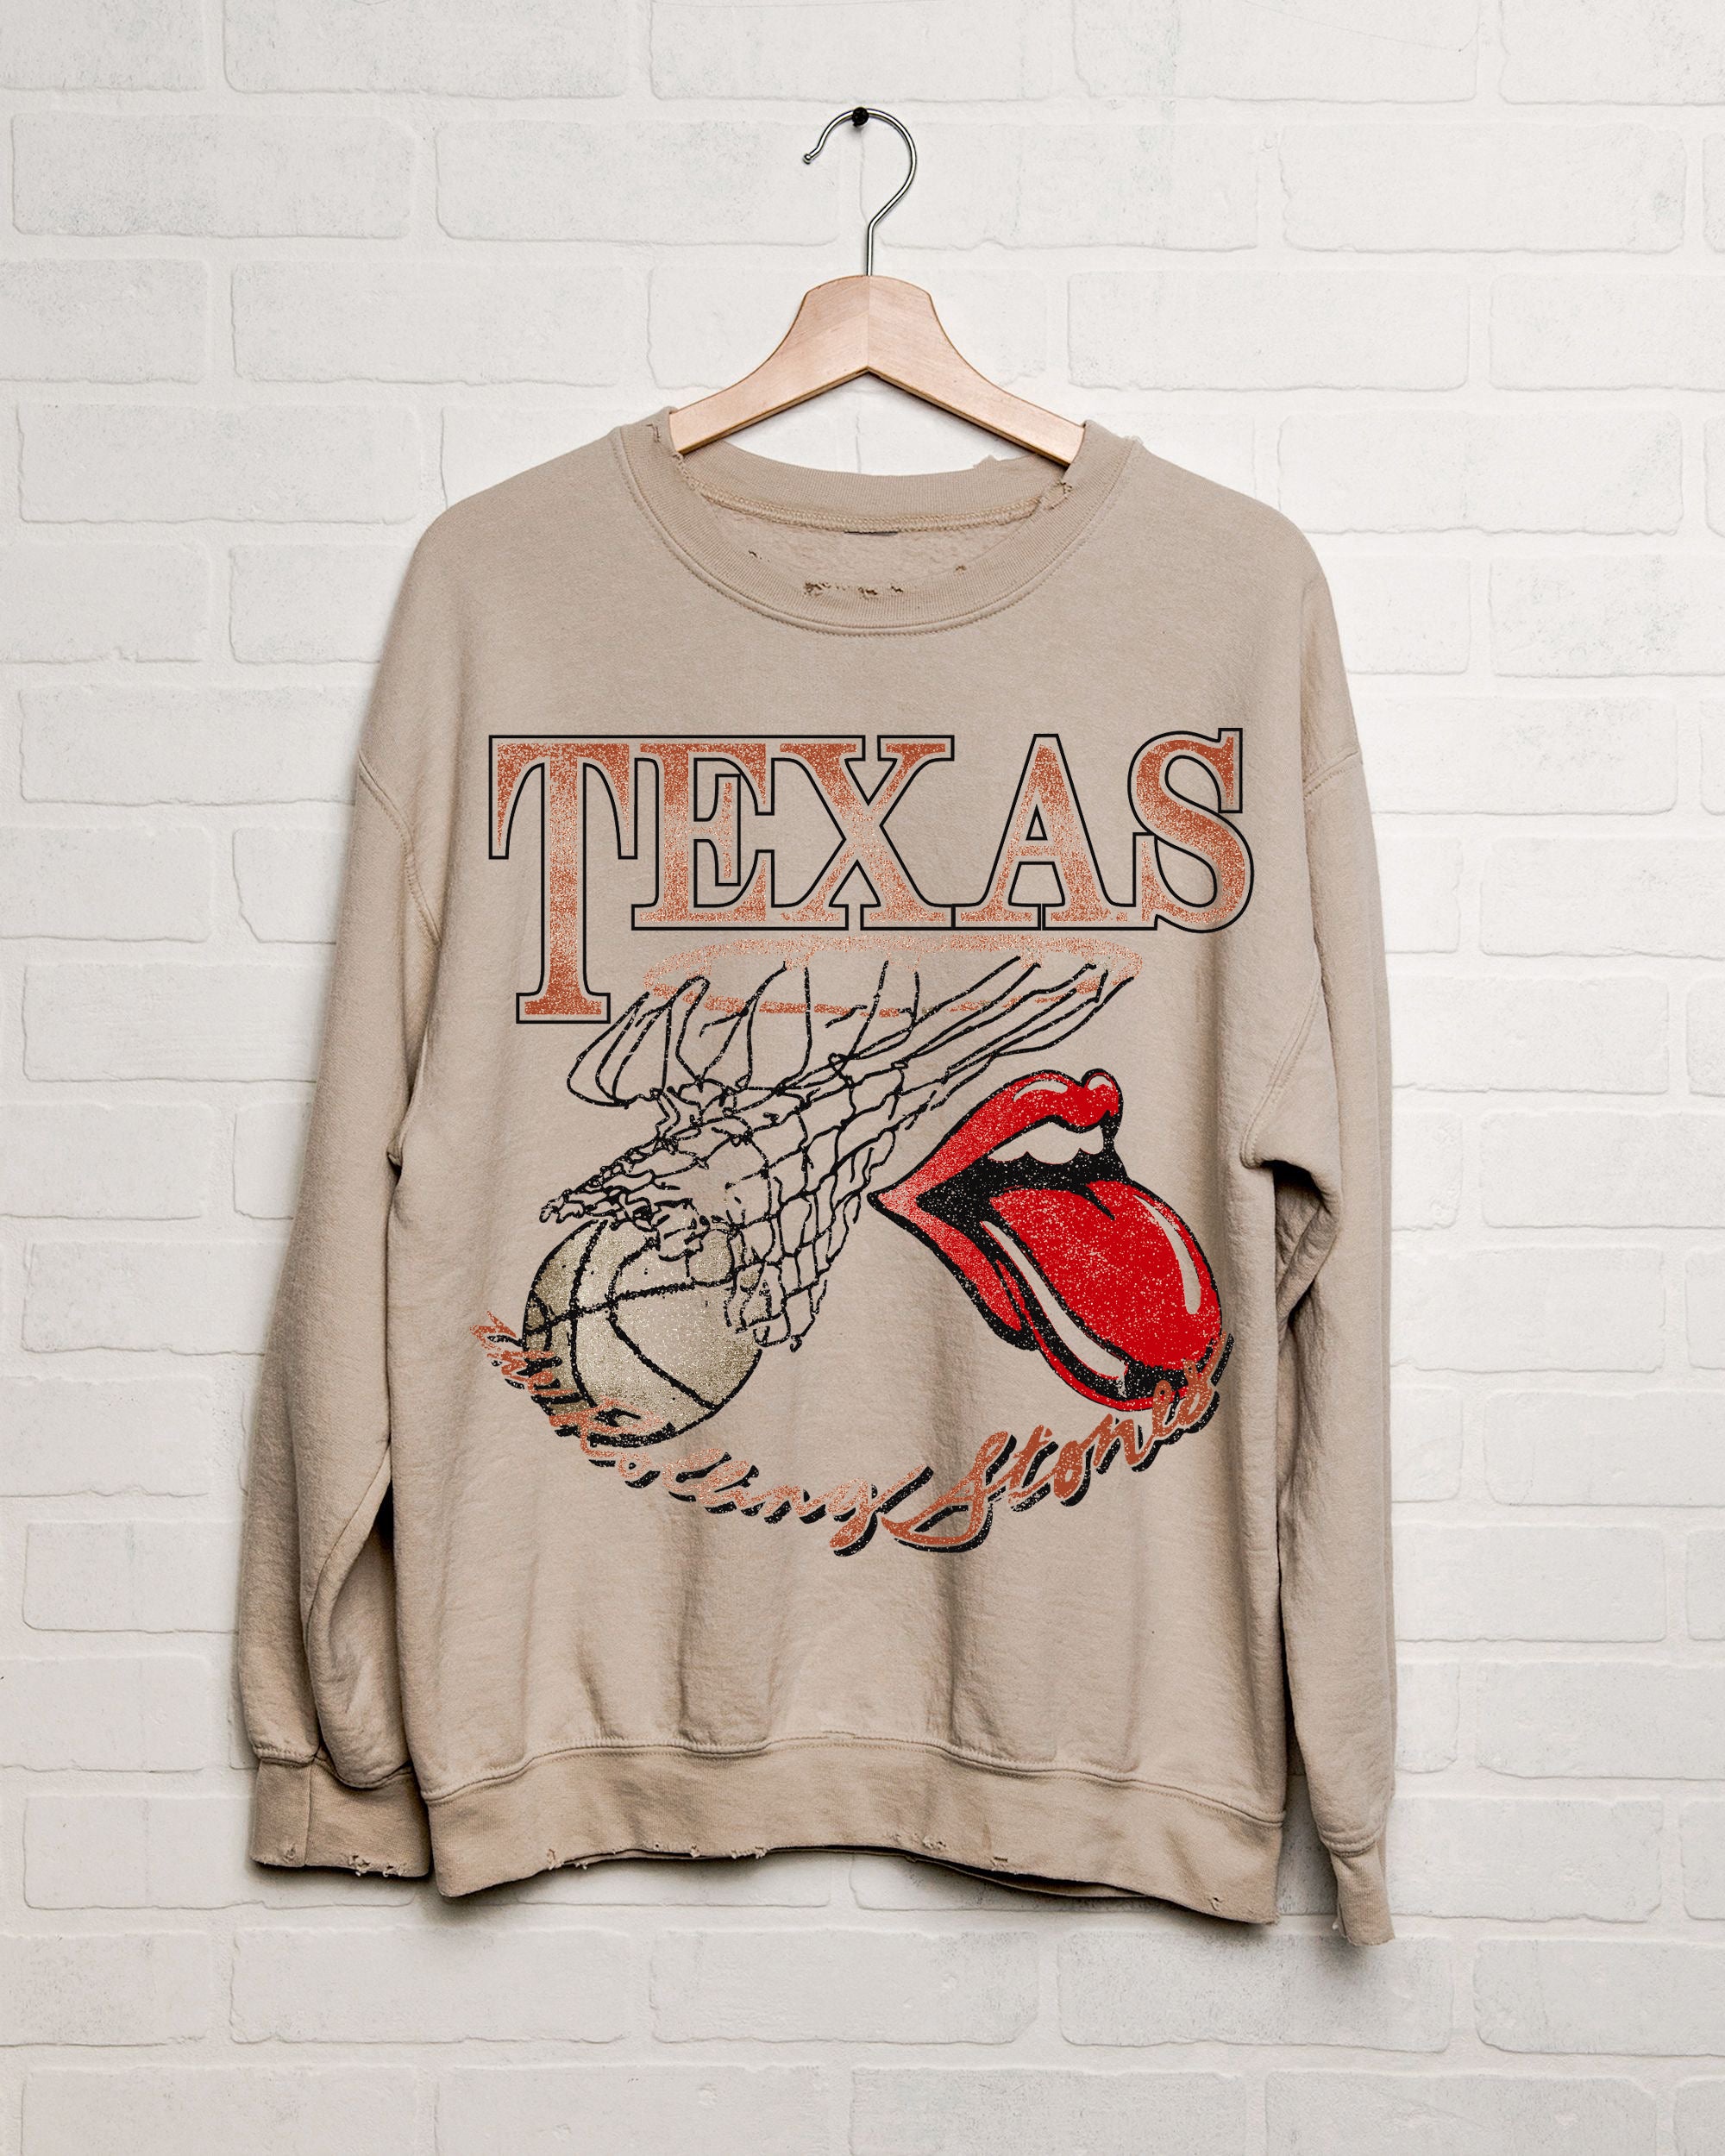 Rolling Stones Longhorns Basketball Net Sand Thrifted Sweatshirt - shoplivylu